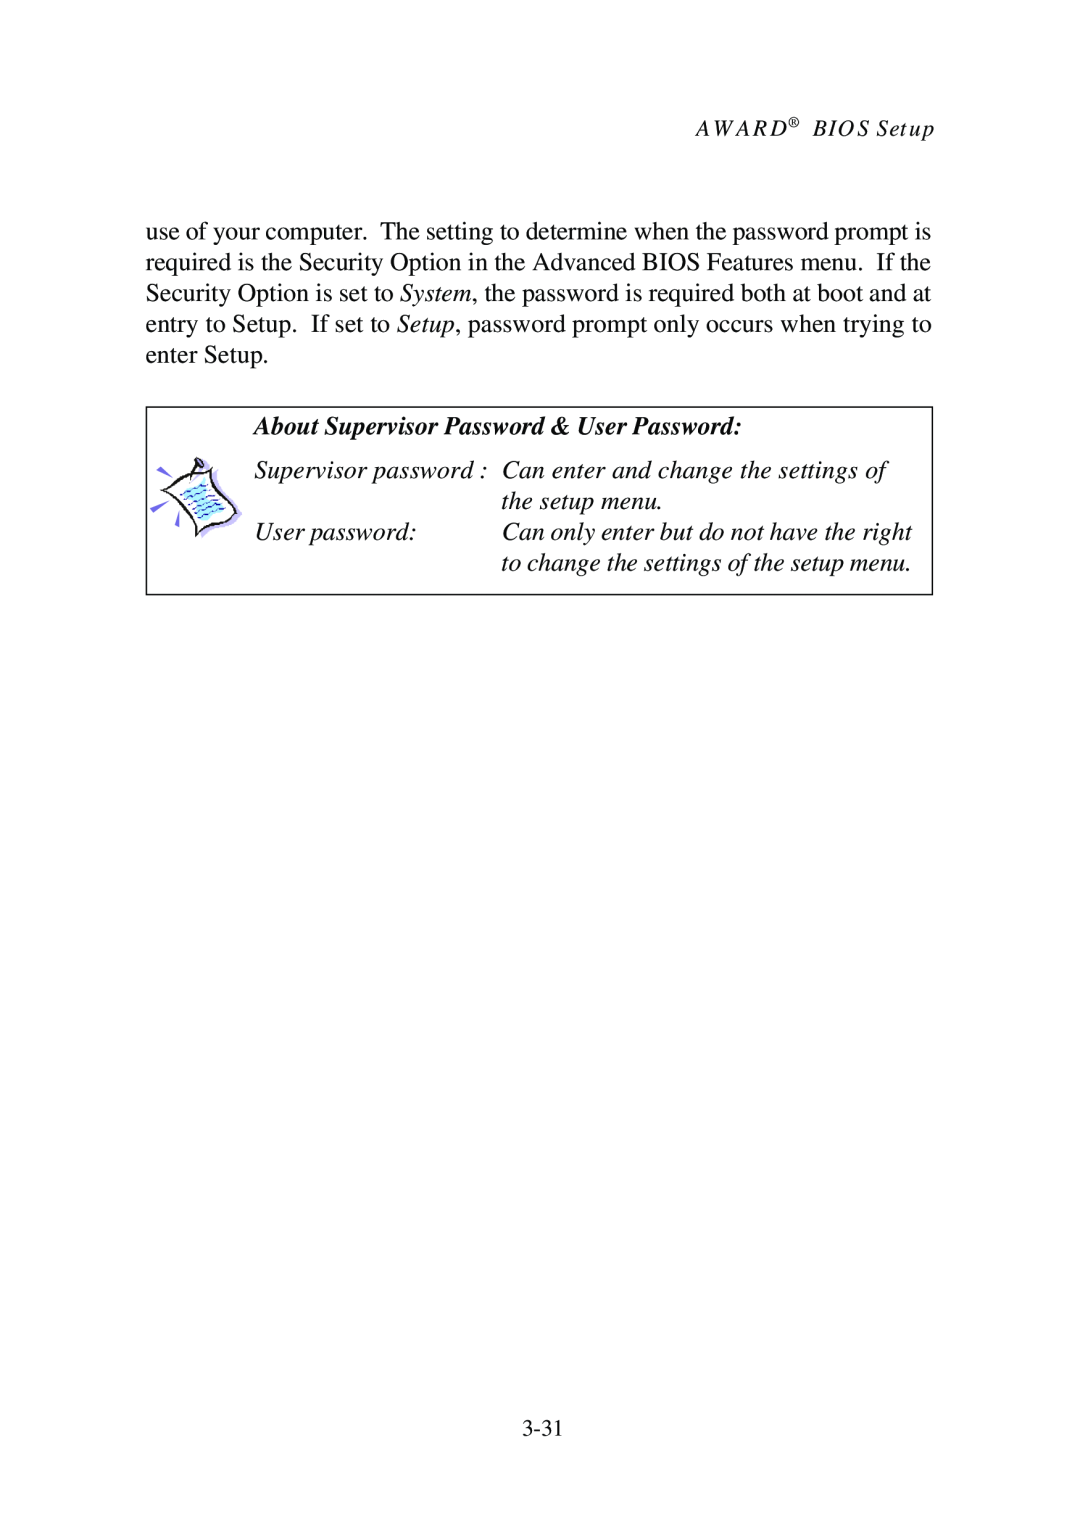 Premio Computer Aries/Centella manual About Supervisor Password & User Password 